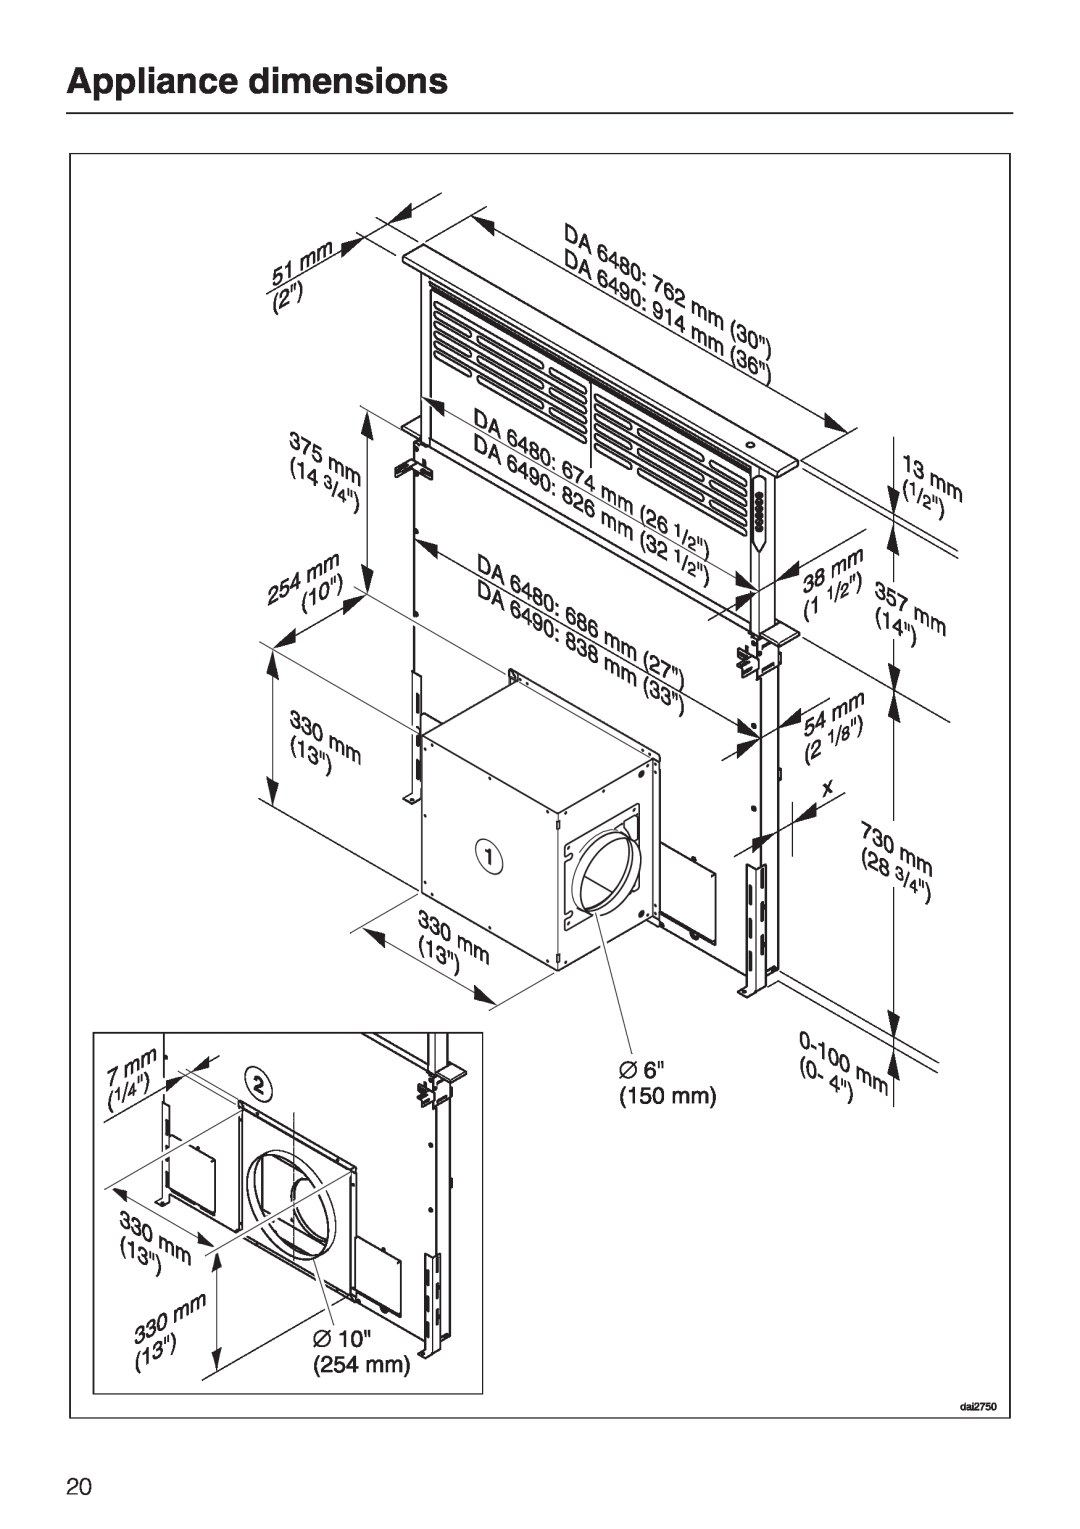 Miele DA 6490, DA 6480, DAG 500, DAG 1000 installation instructions Appliance dimensions 